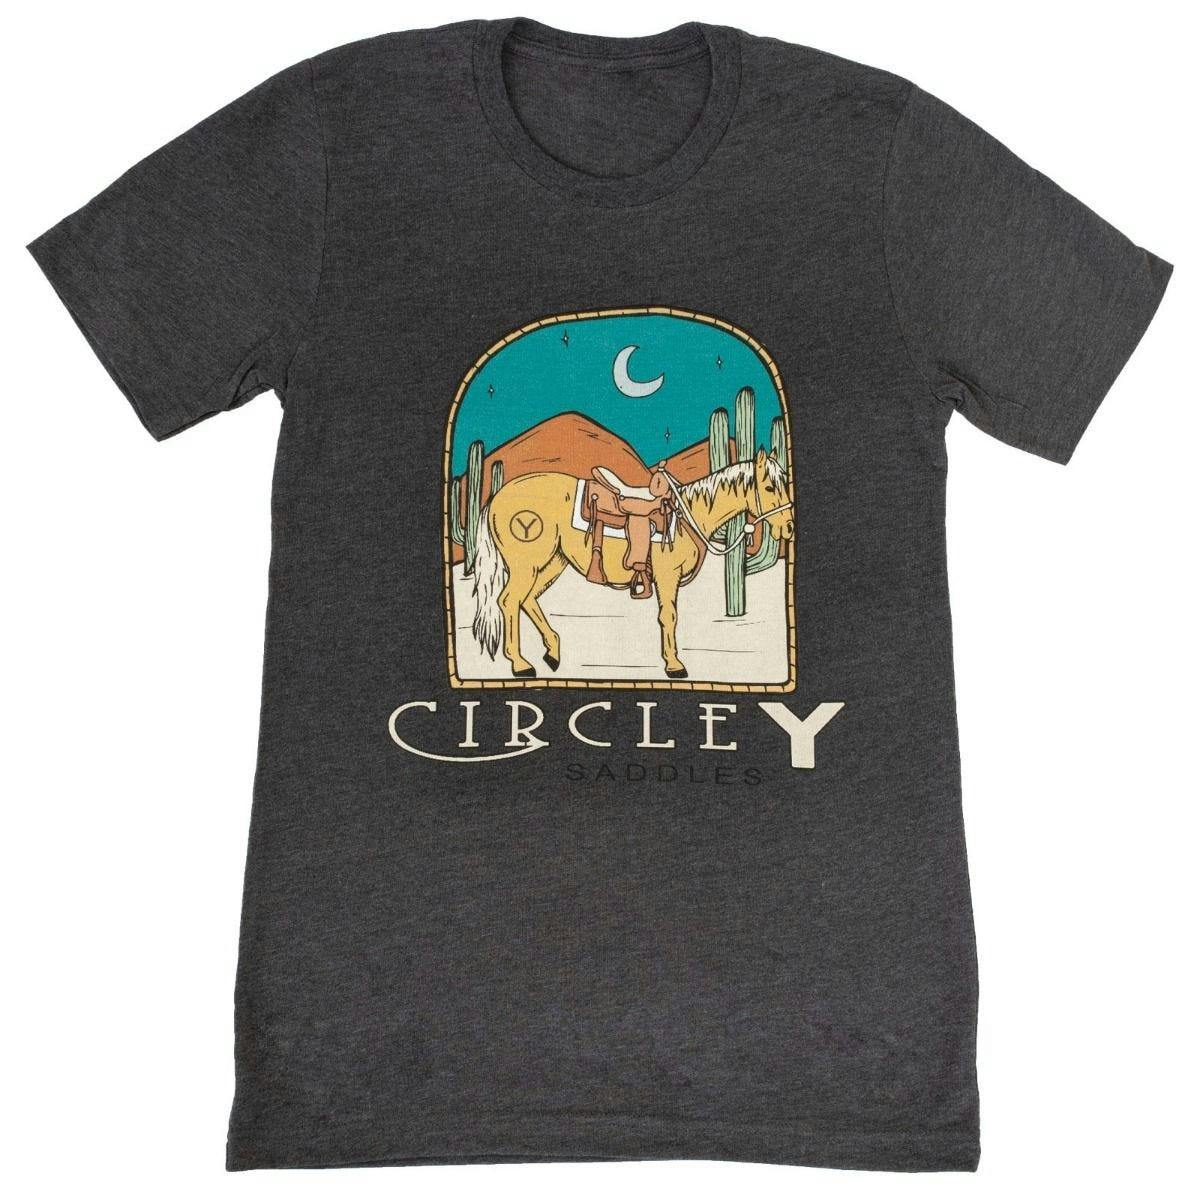 Circle Y Scenic Horse Shirt